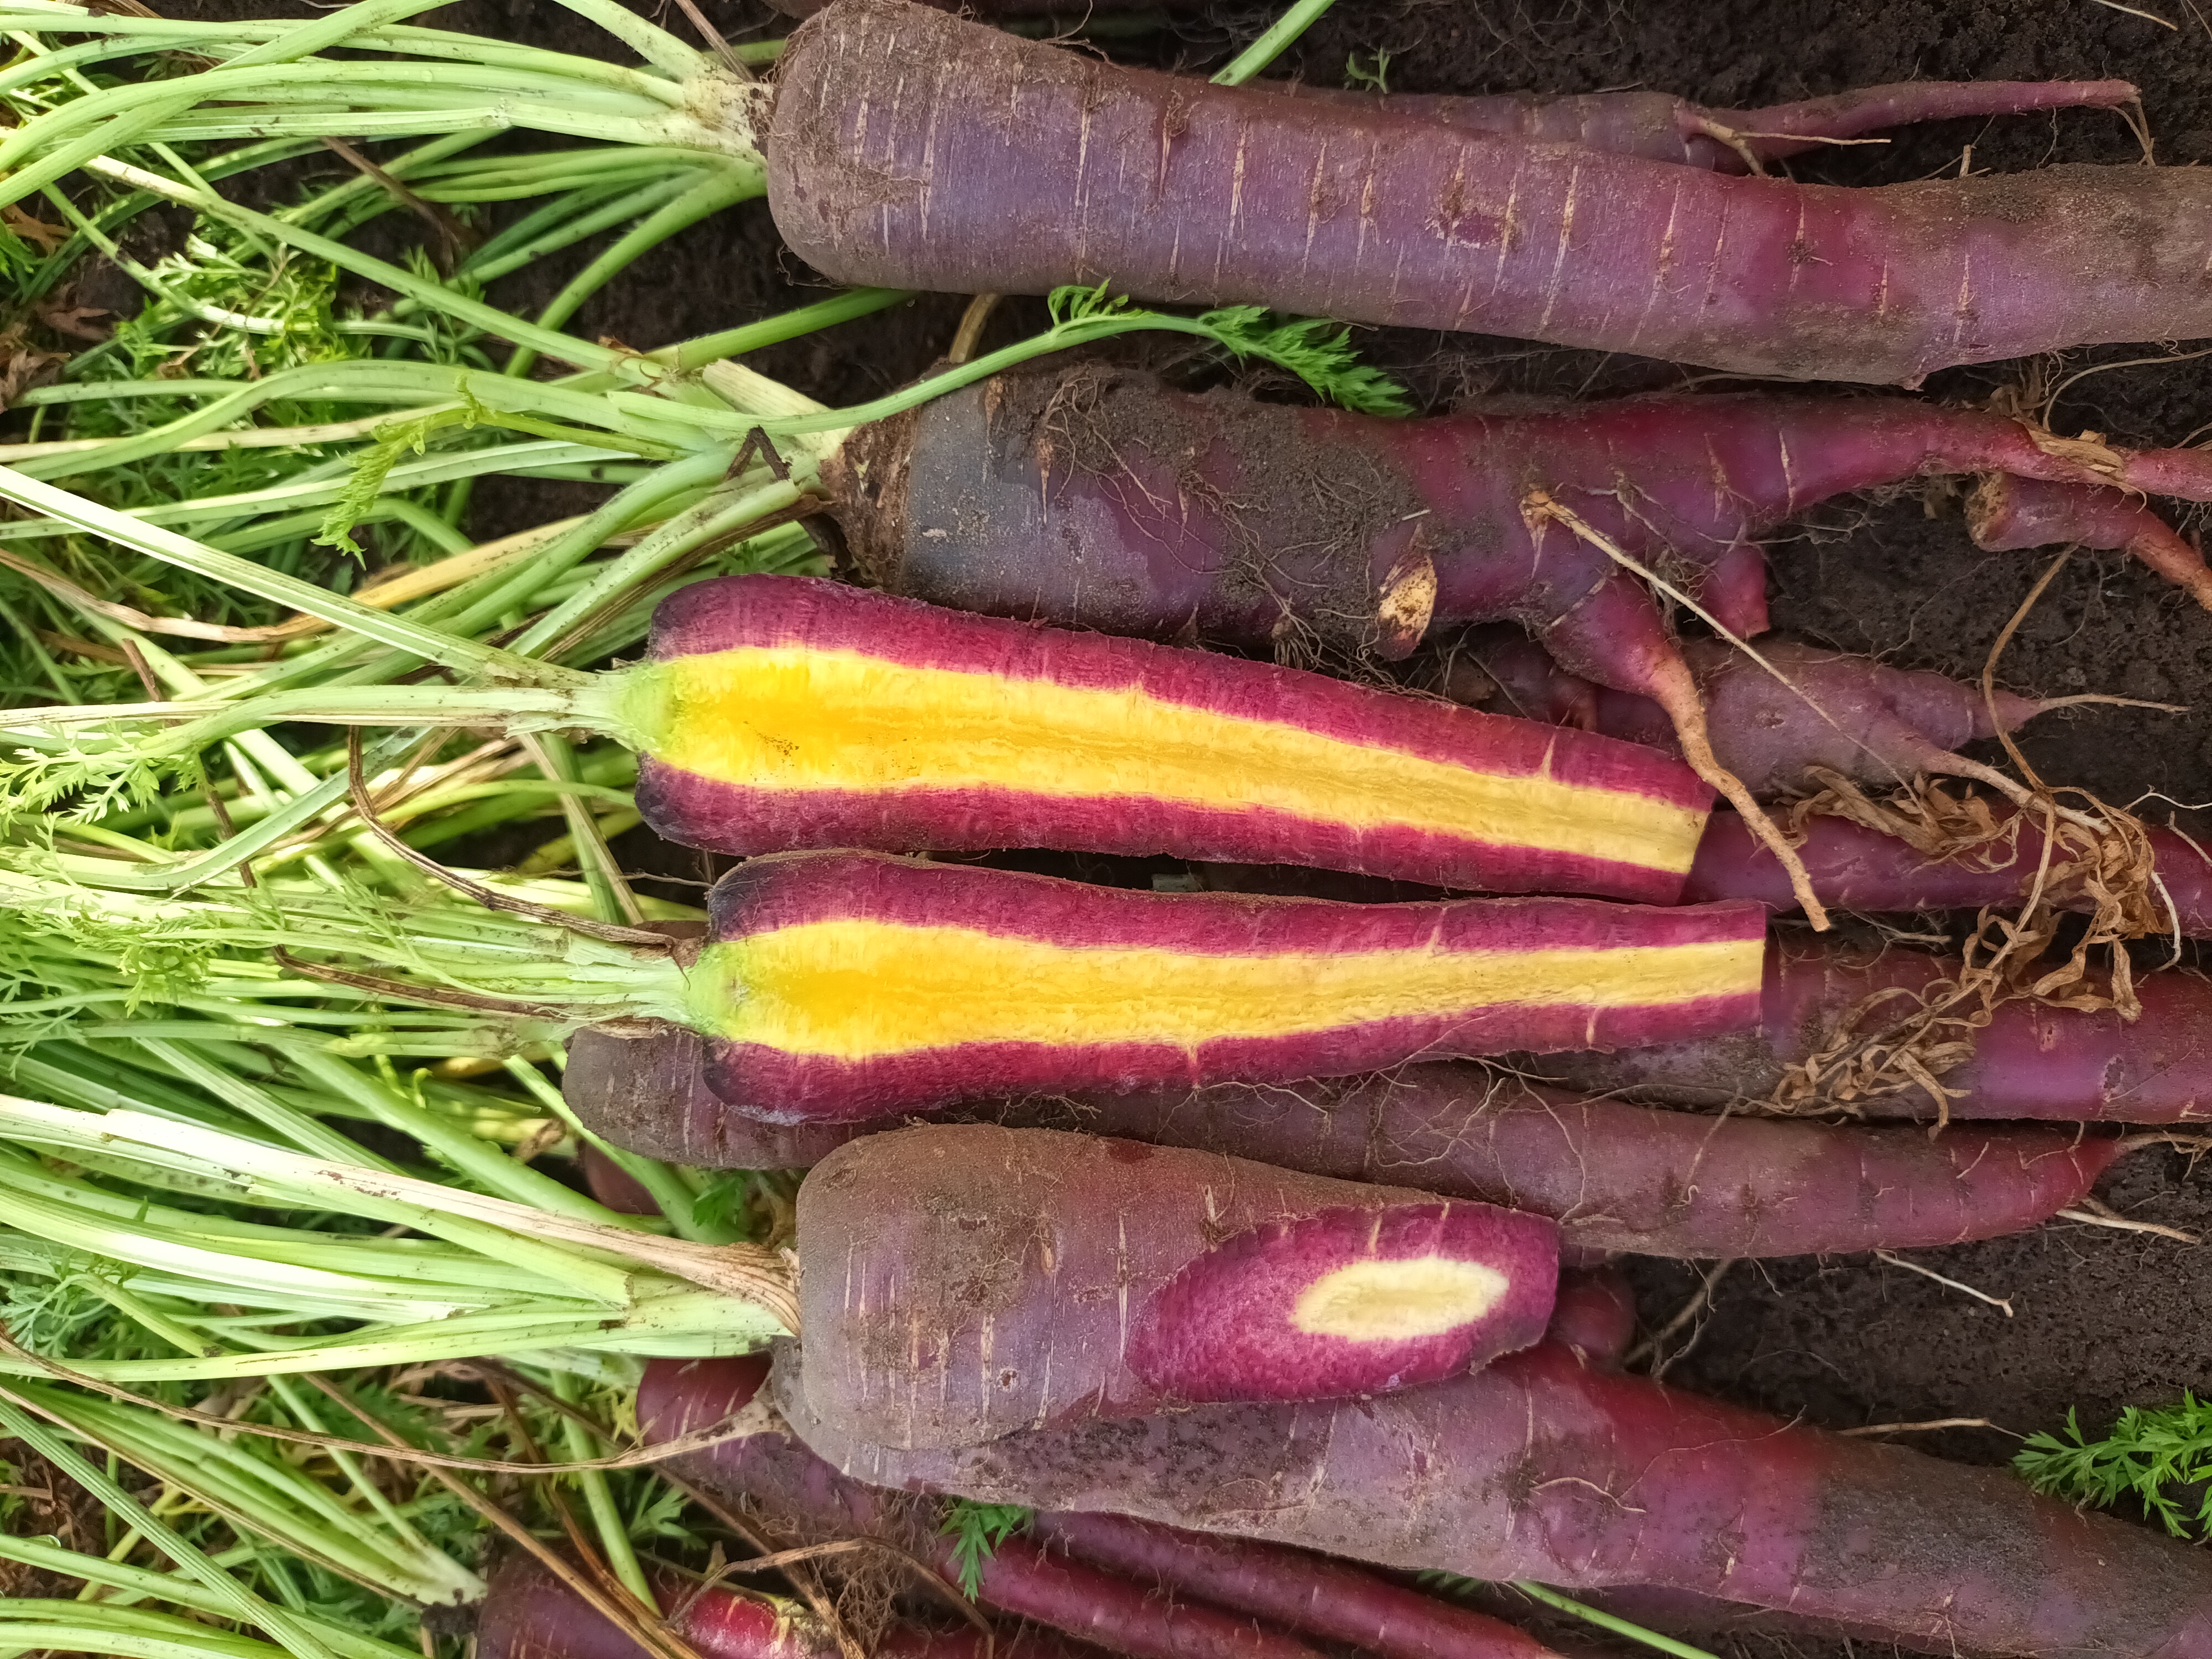 Purple carrot